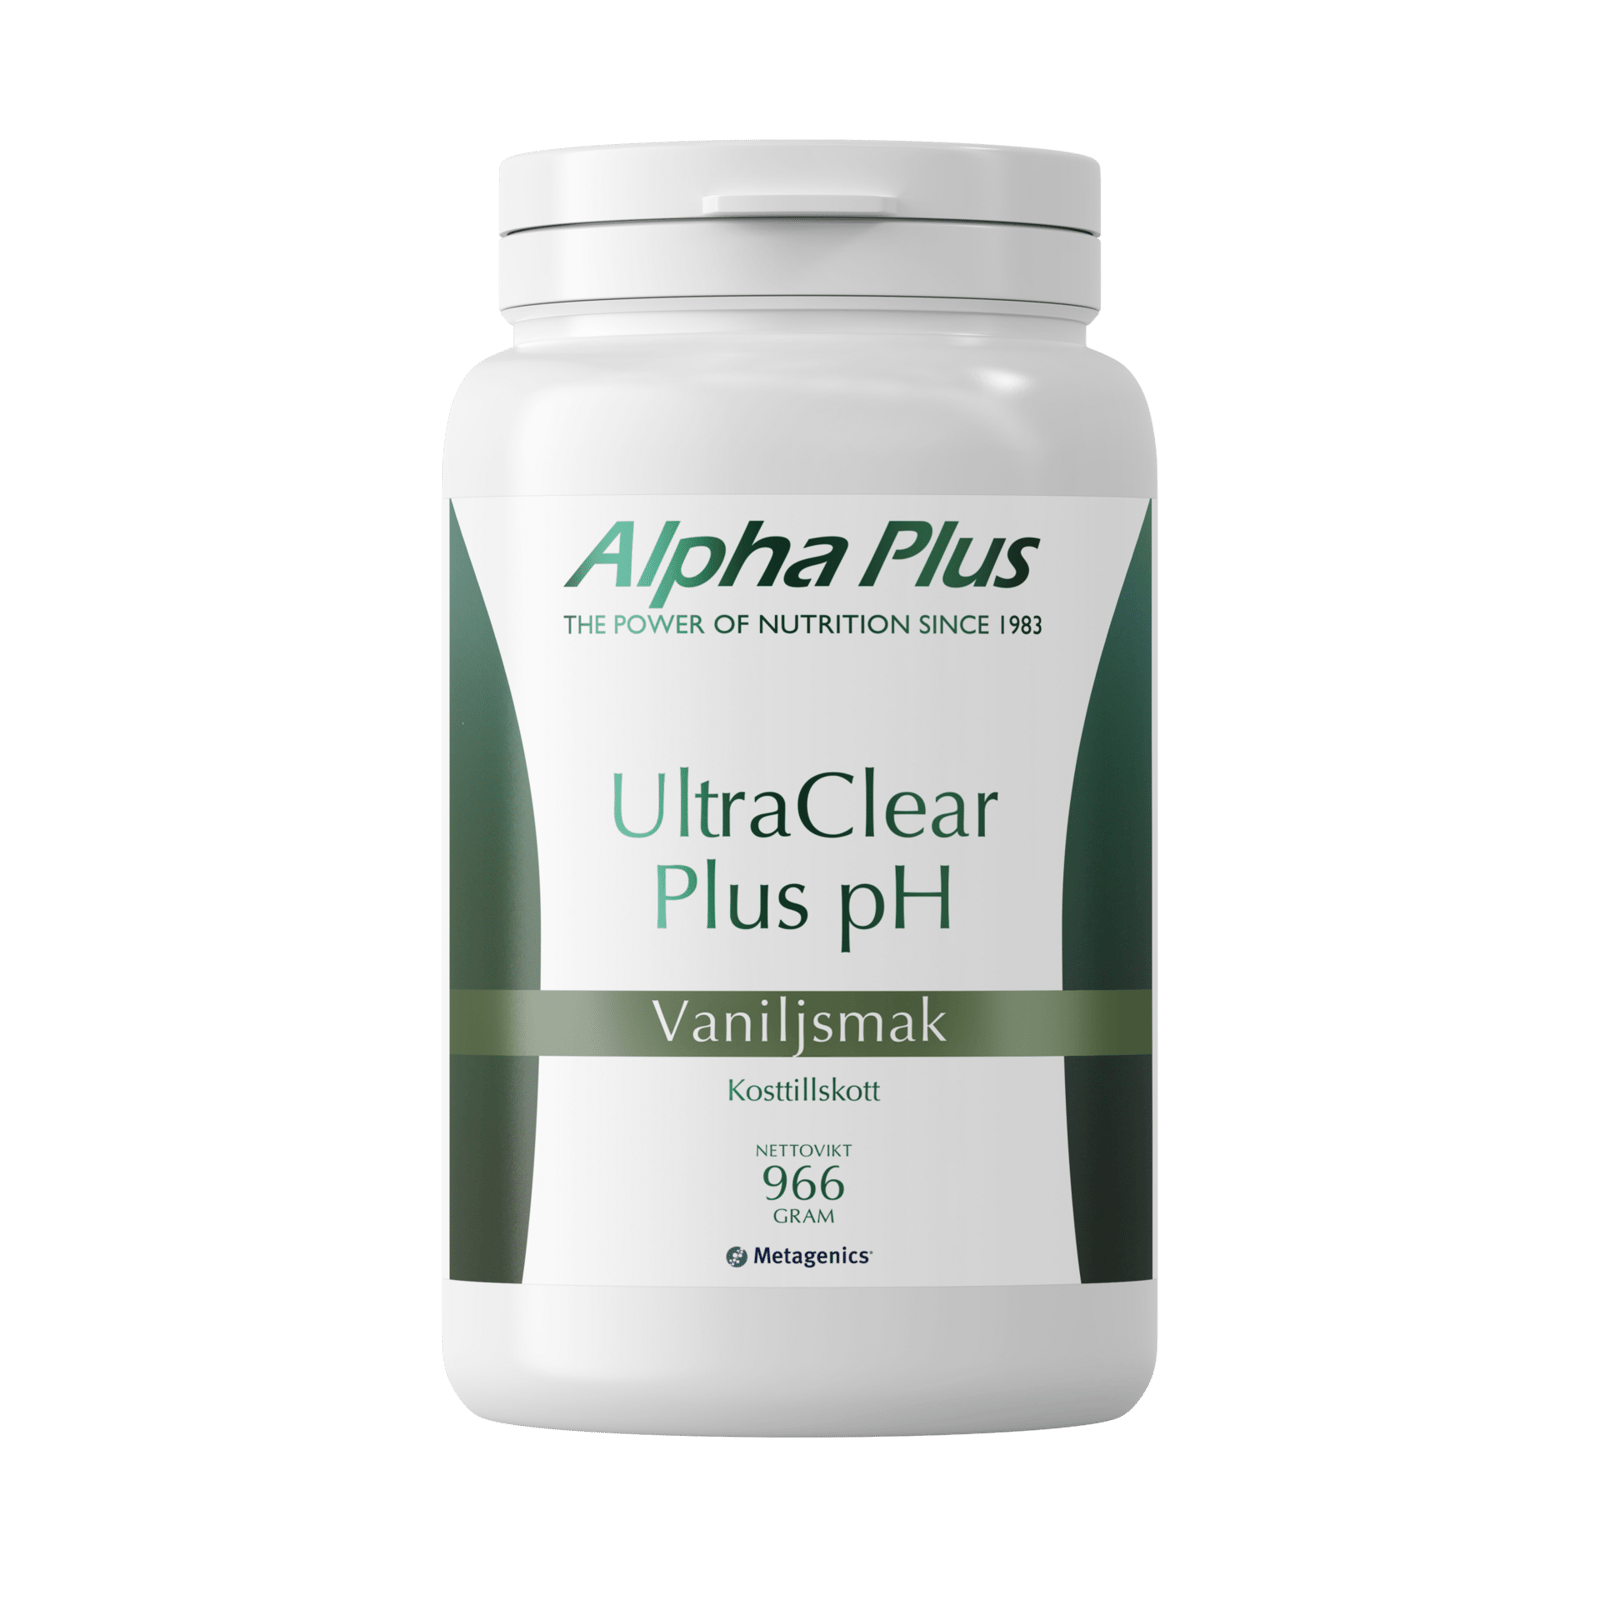 Alpha Plus UltraClear Plus pH Vaniljsmak 966g